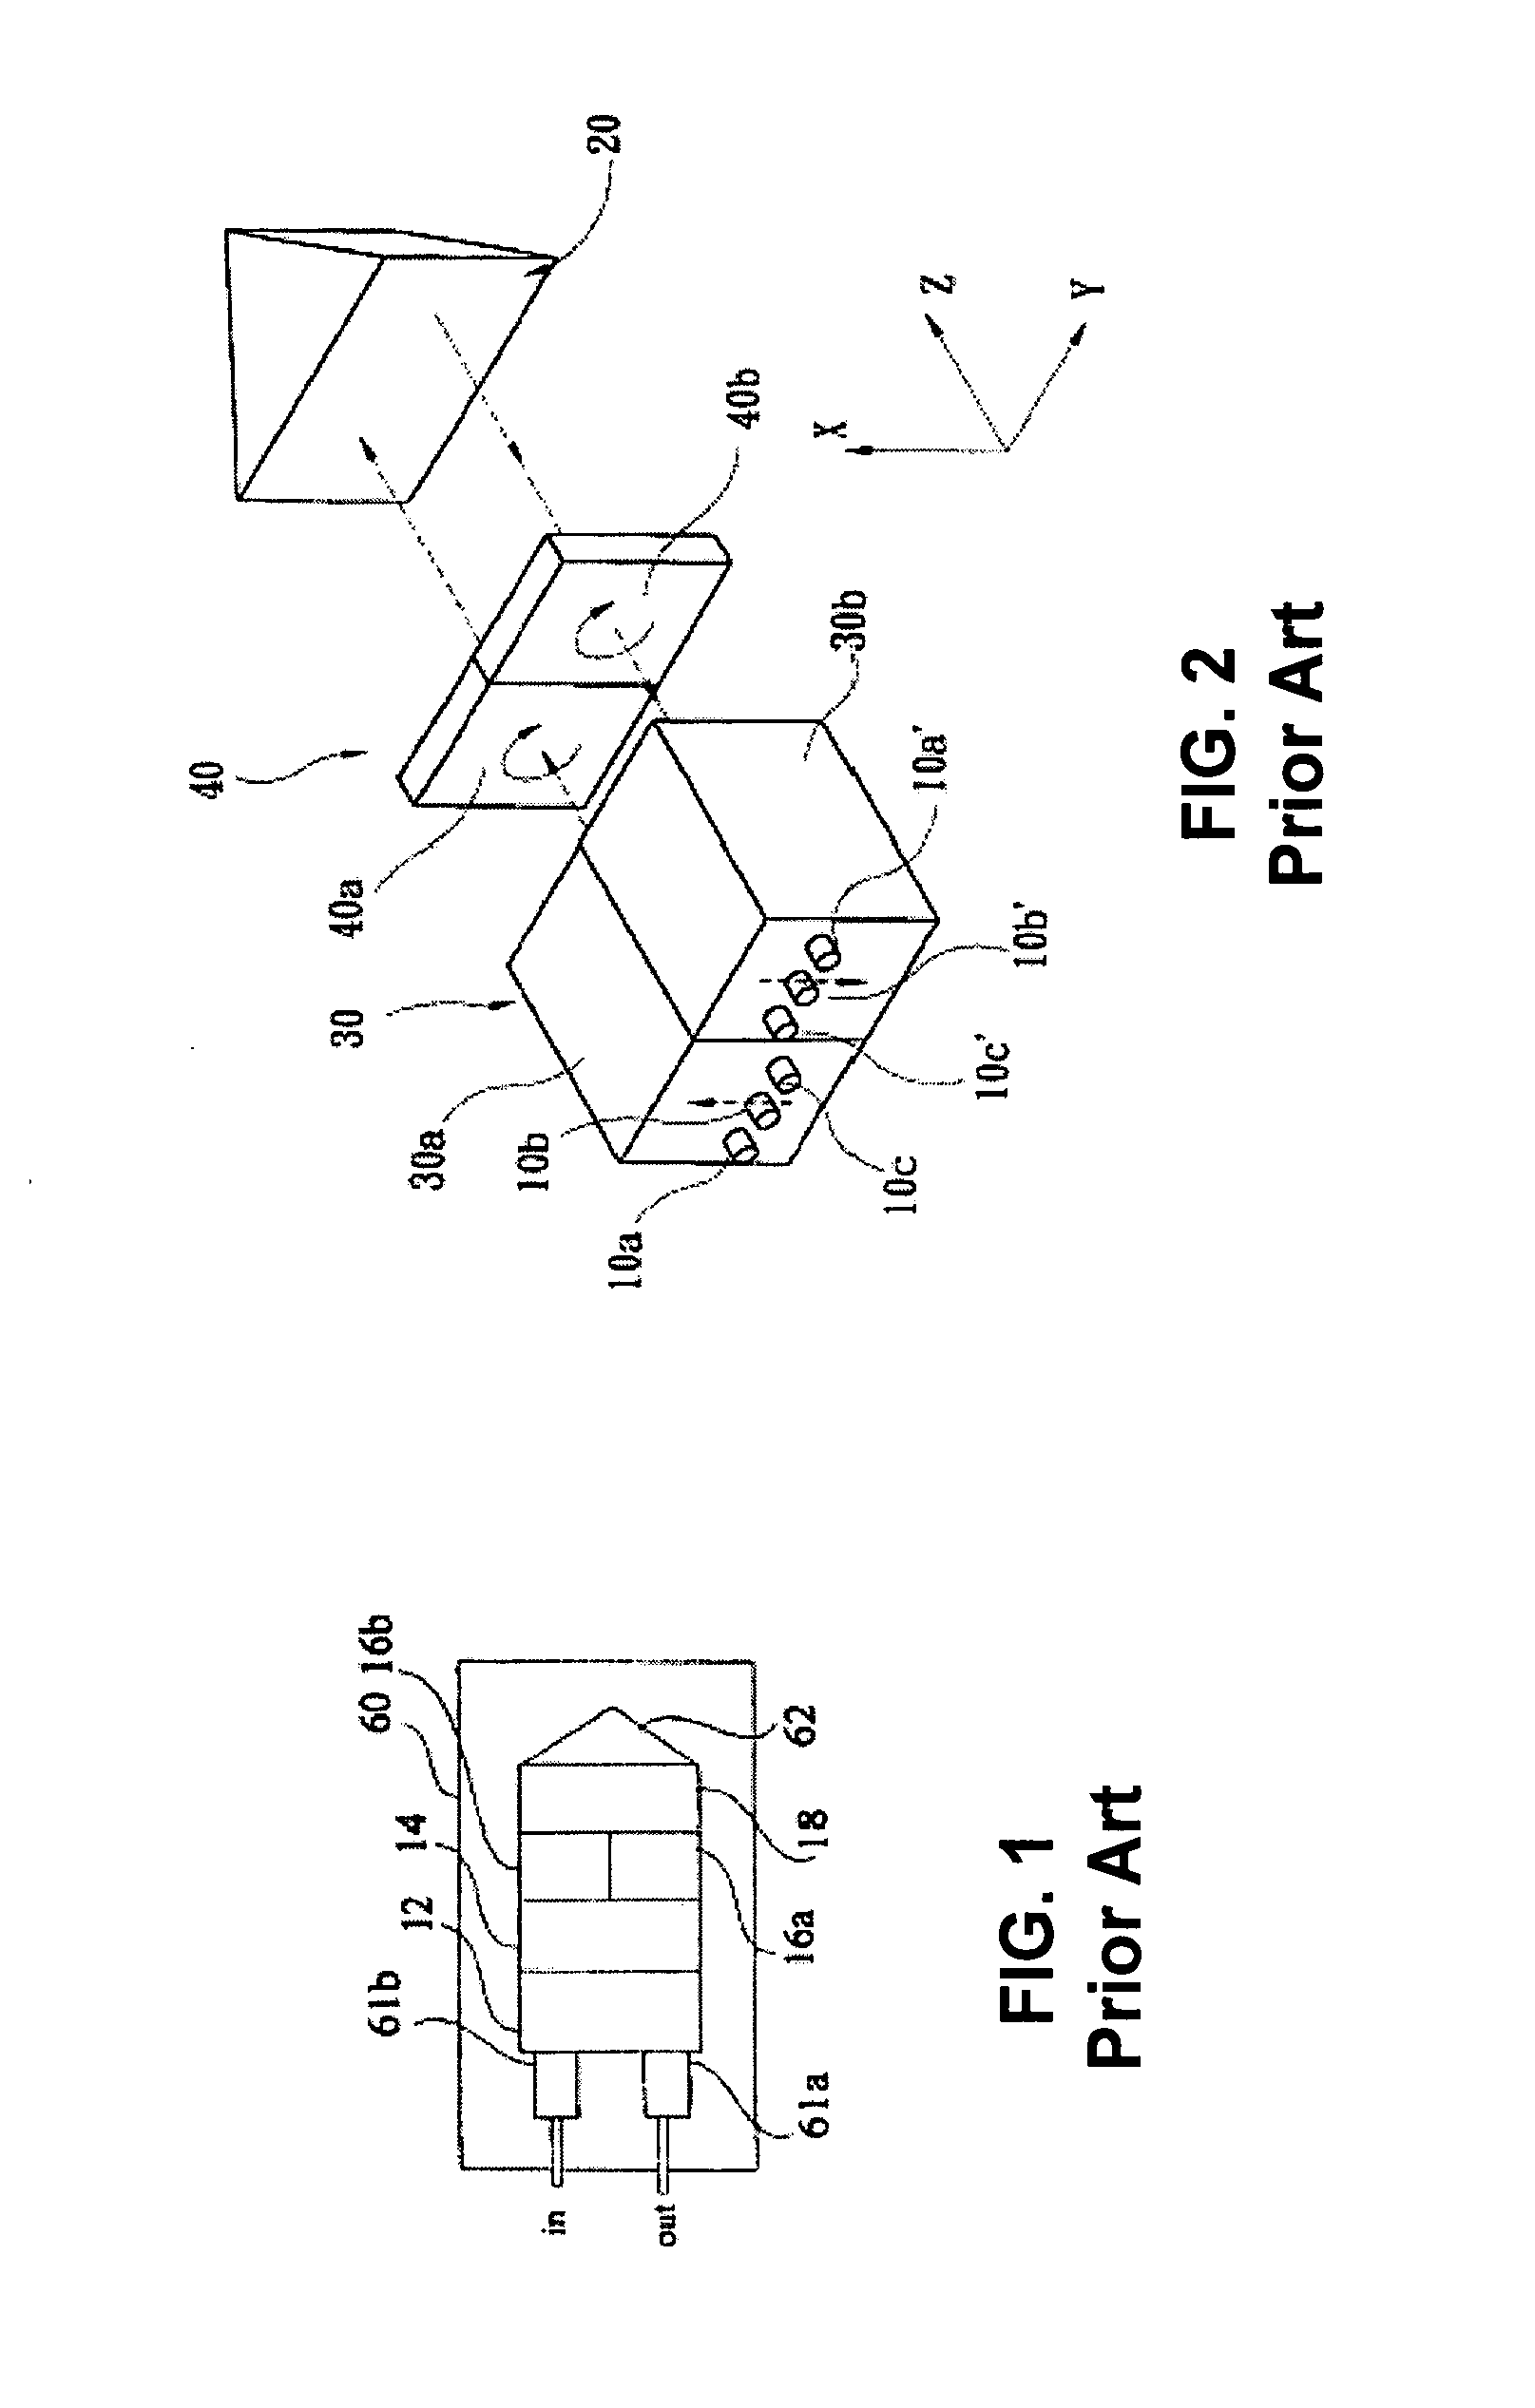 Multi-stage optical isolator